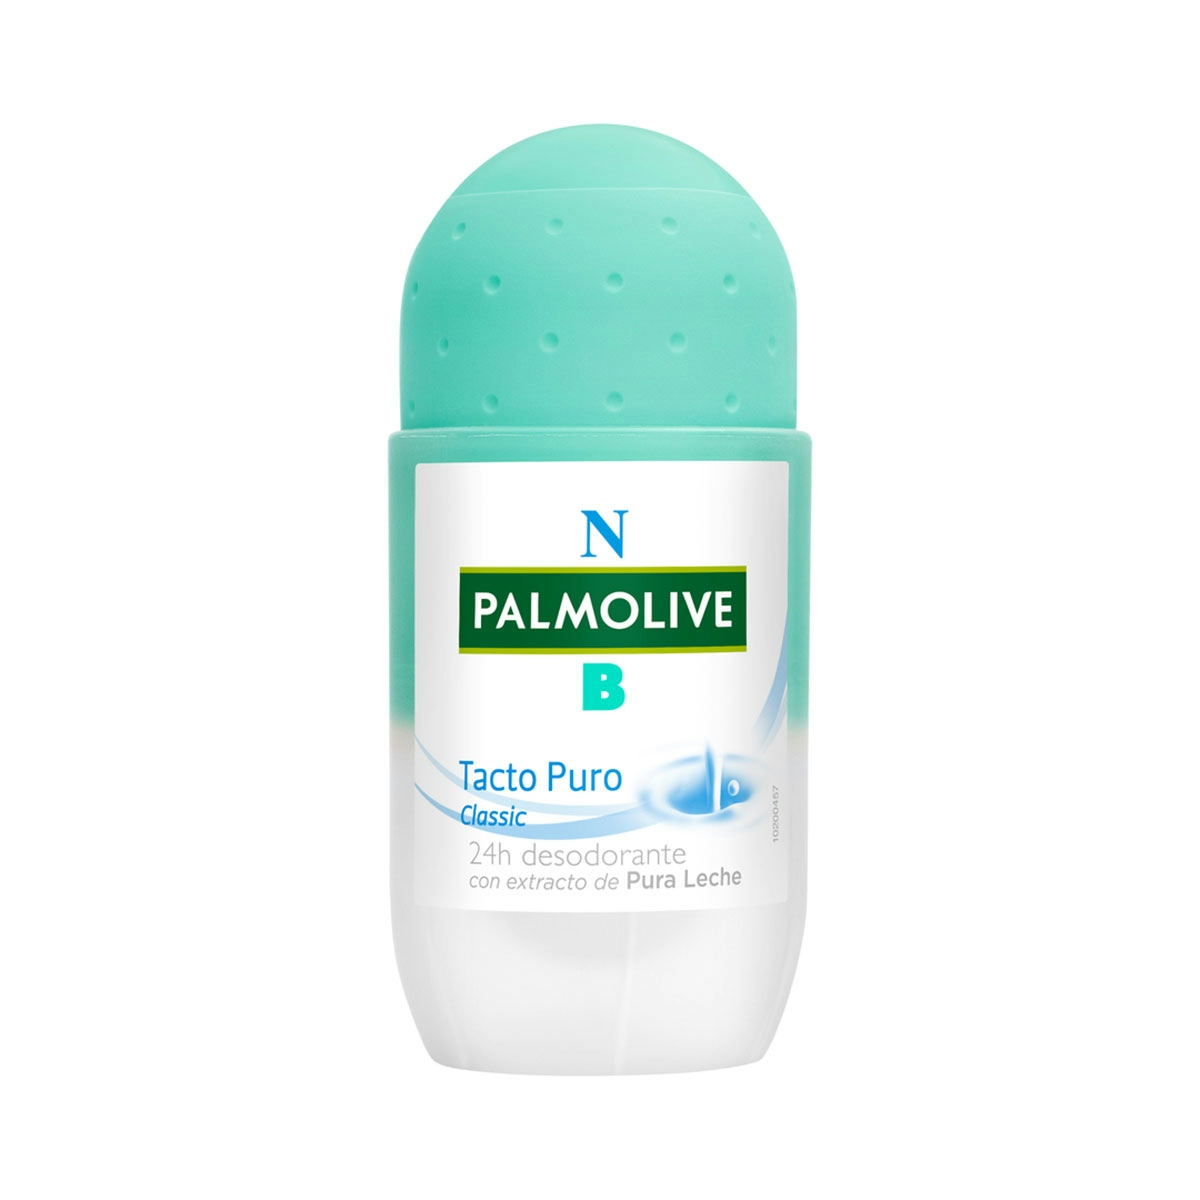 Desodorante roll-on tacto puro Palmolive NB 50 ml